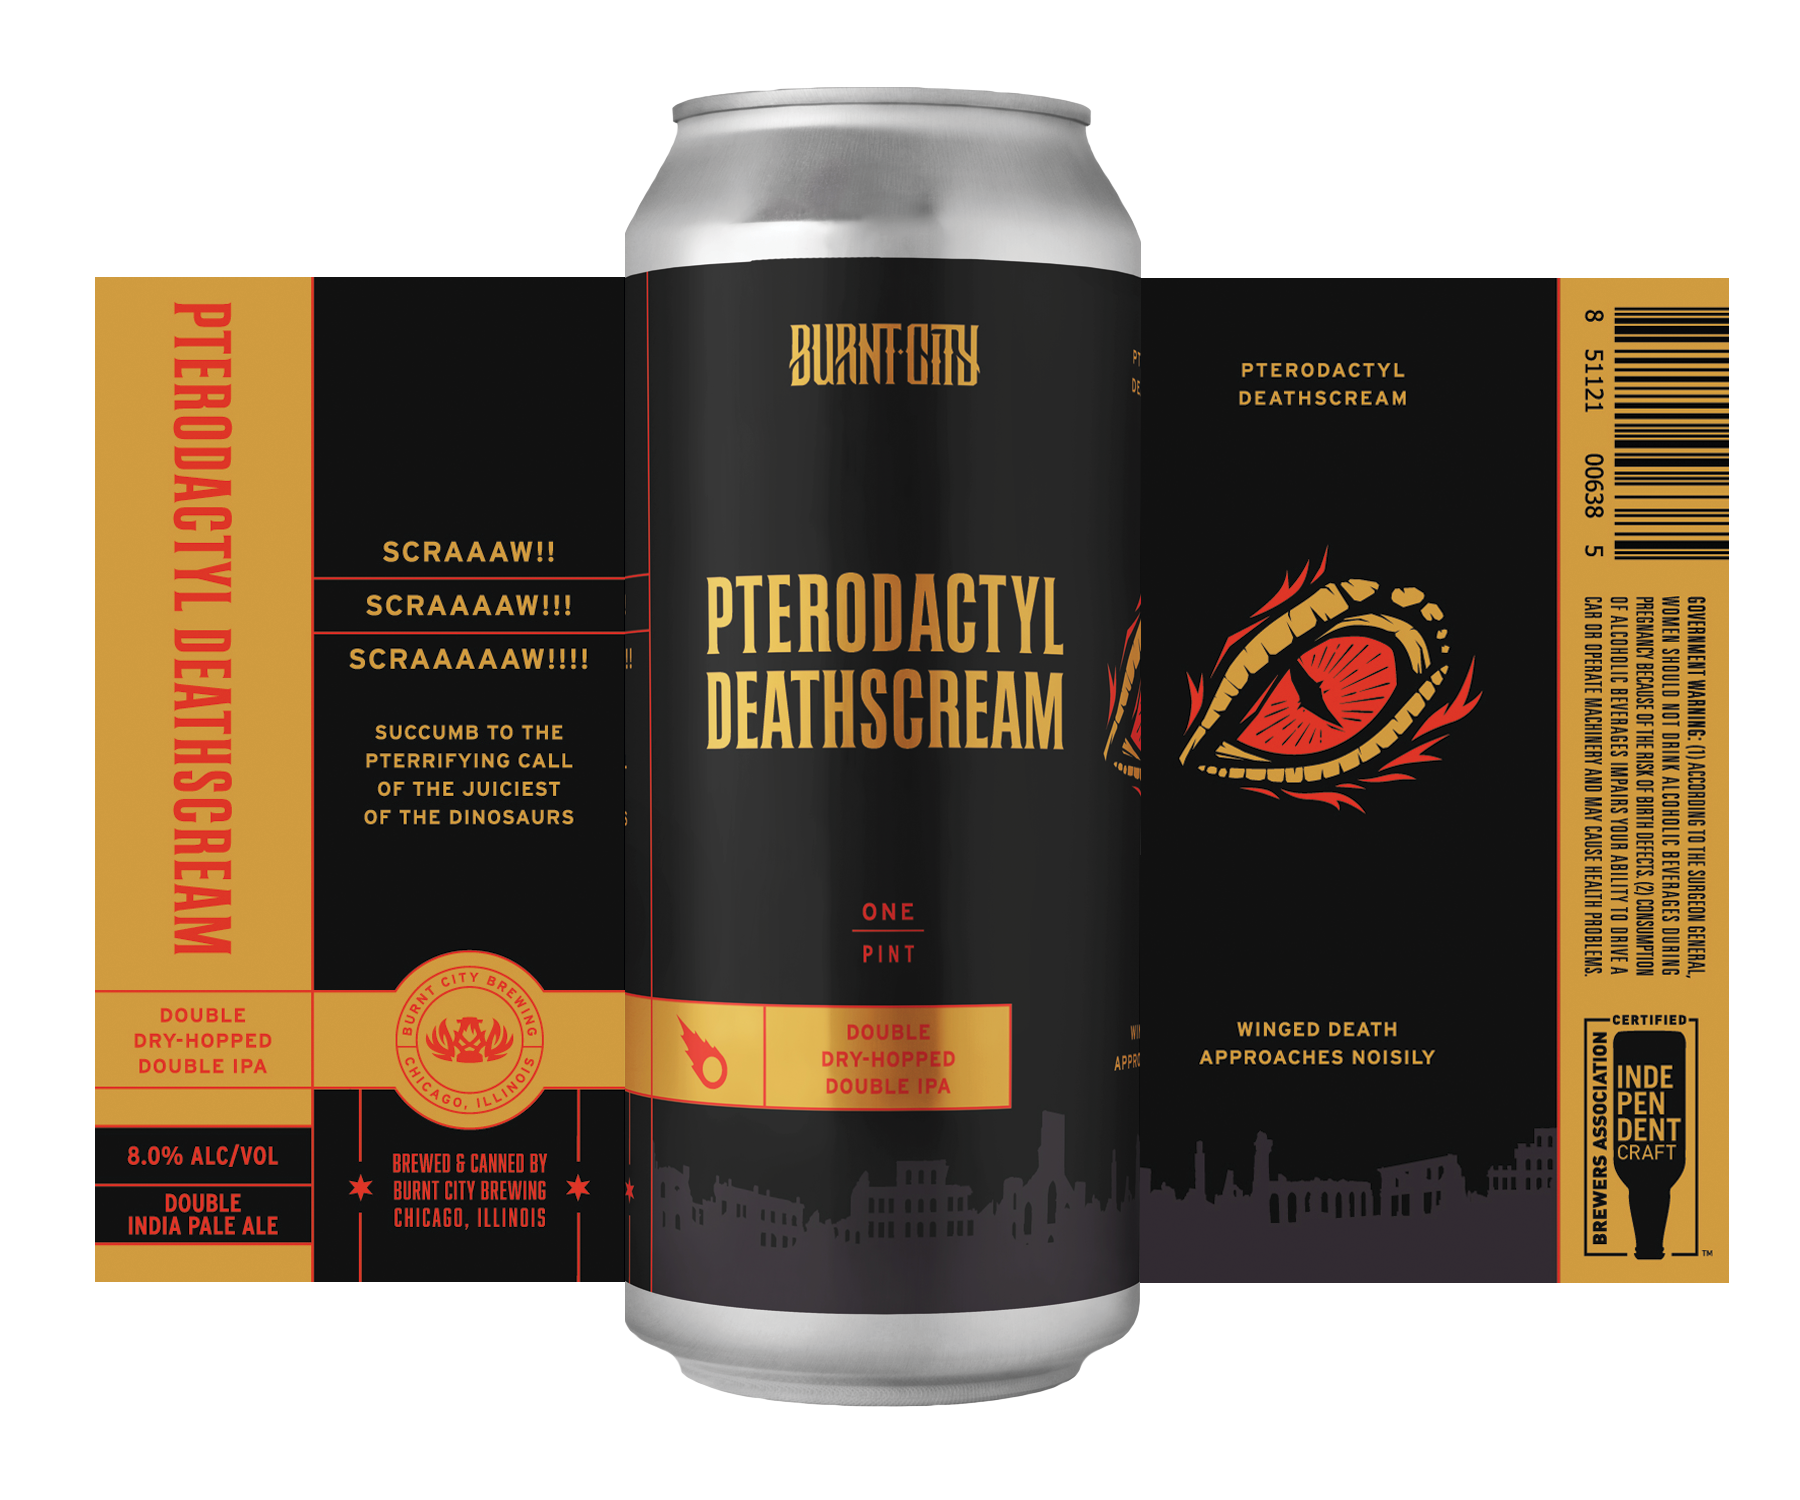 Burnt City Brewing's Pterodactyl Deathscream Hazy Double IPA